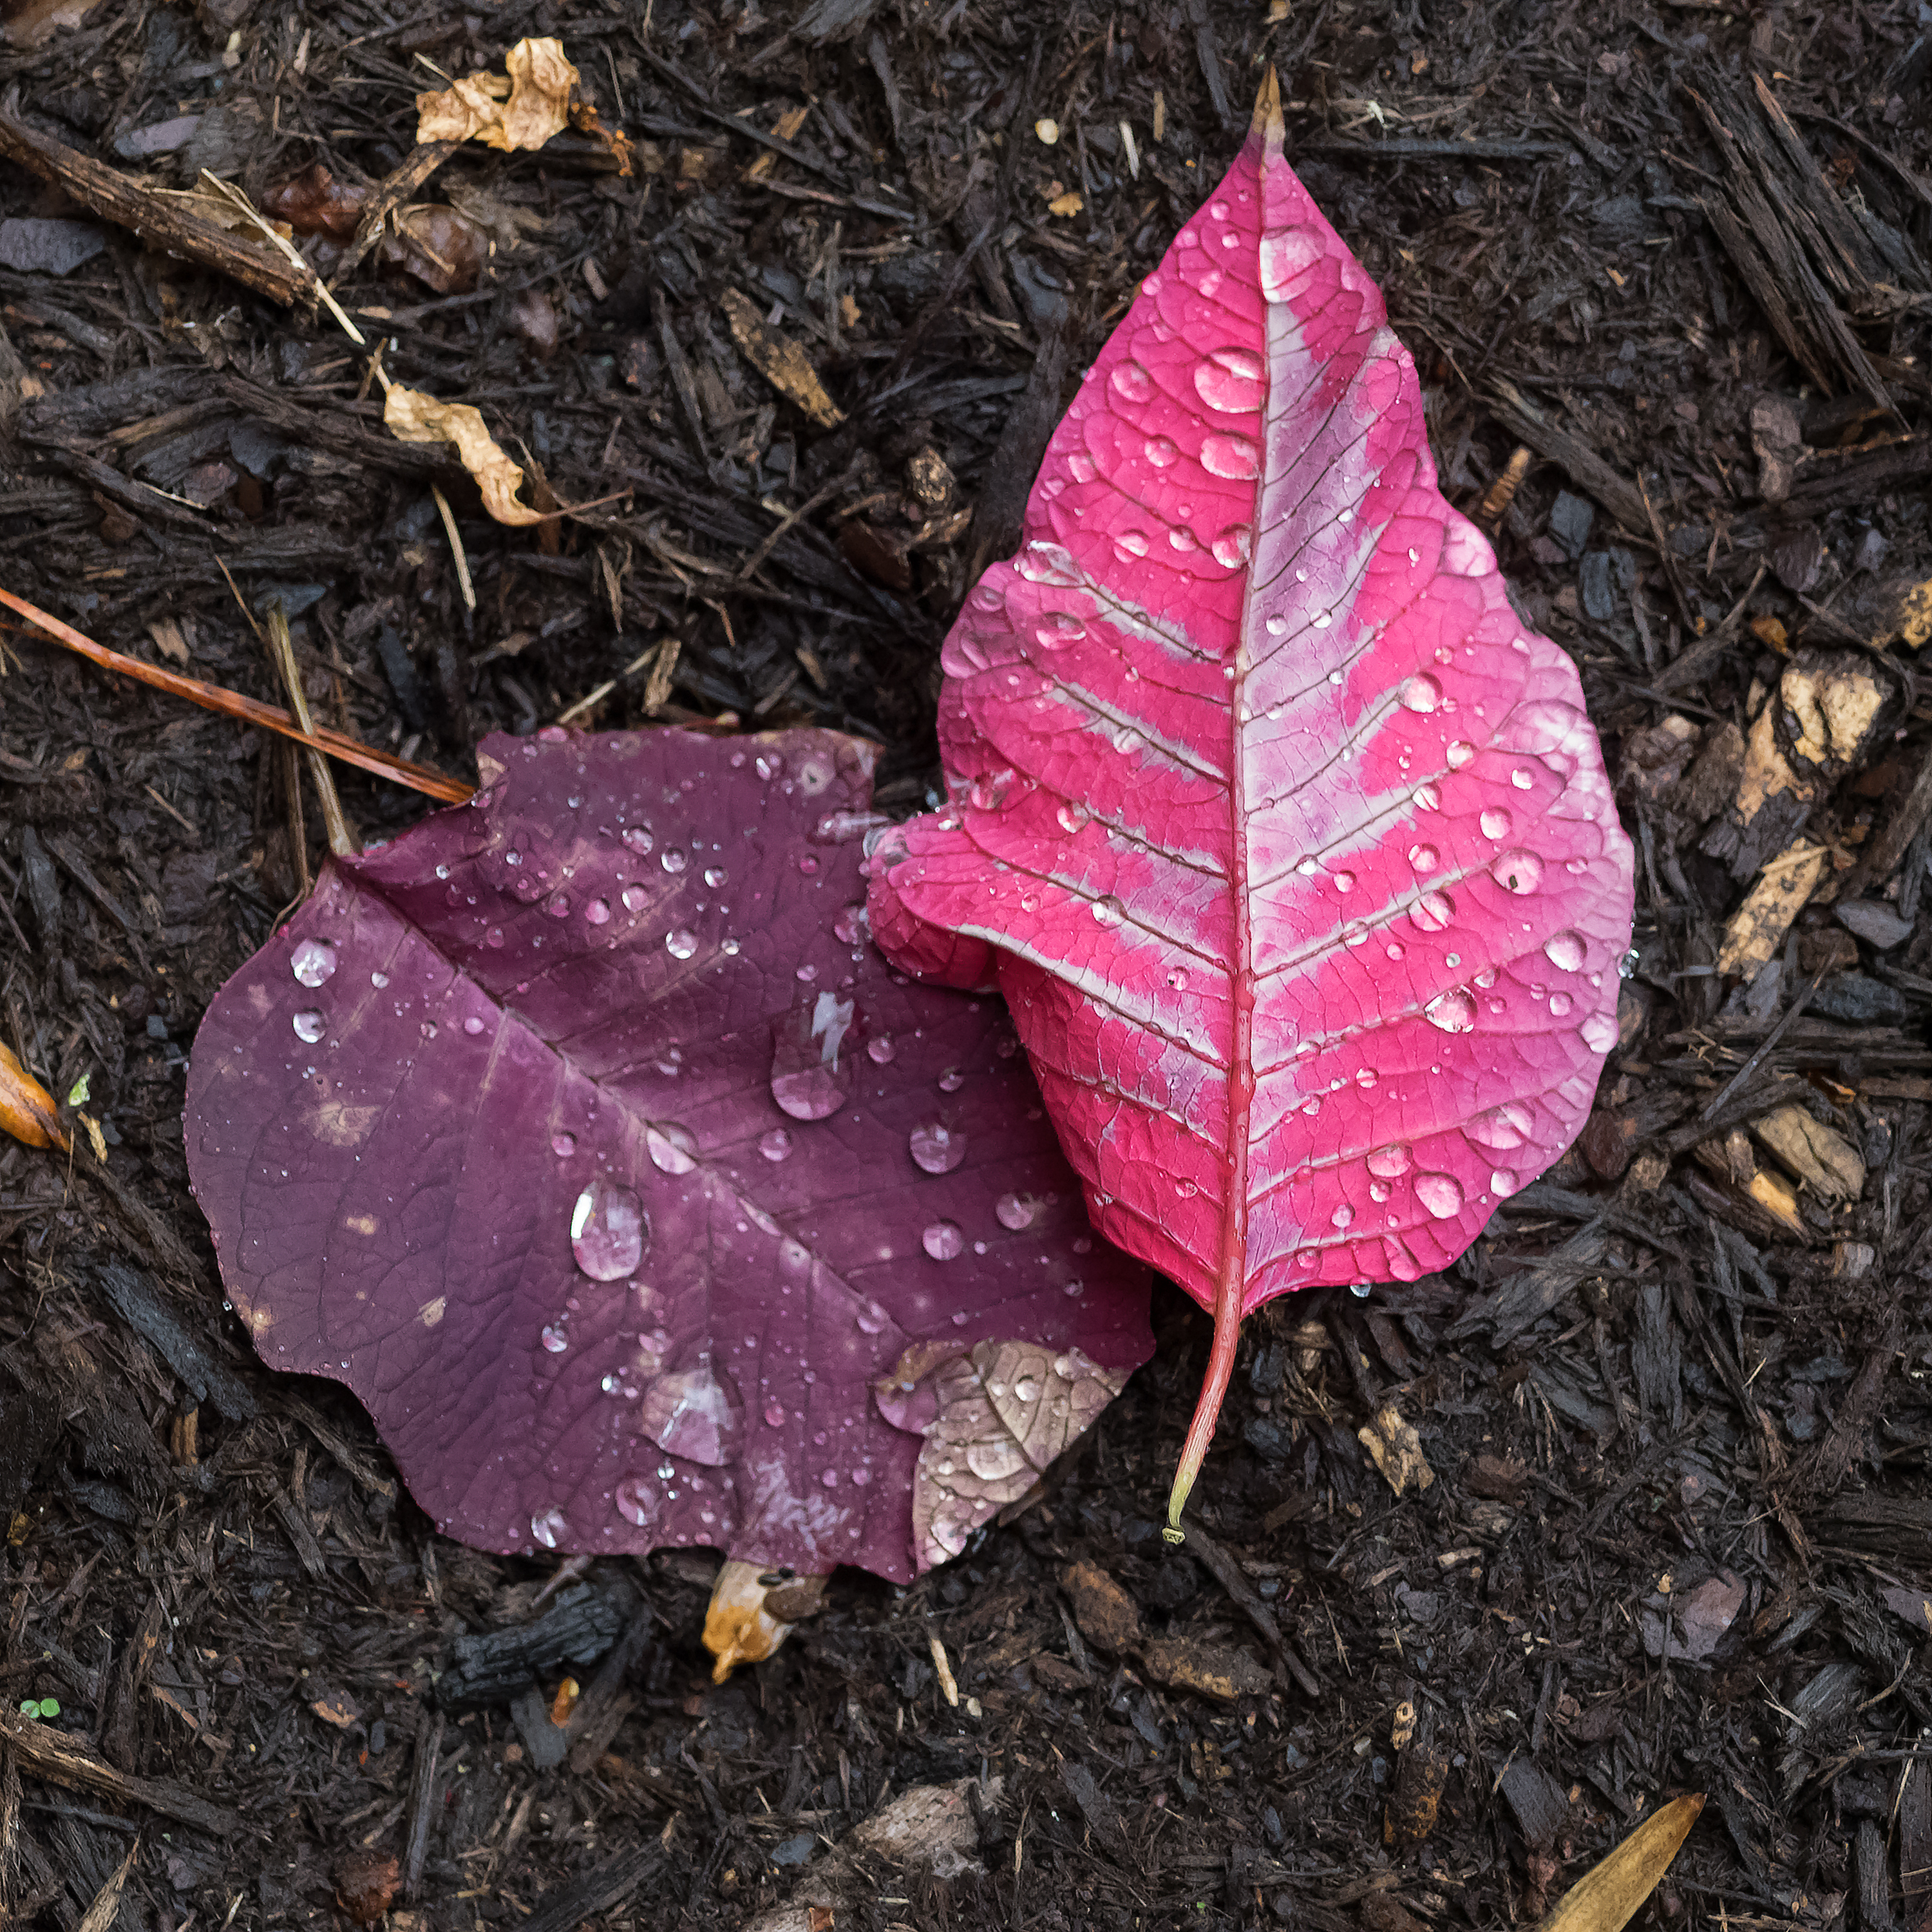 Fallen autumn leaves, Chapel Hill, North Carolina (2018)